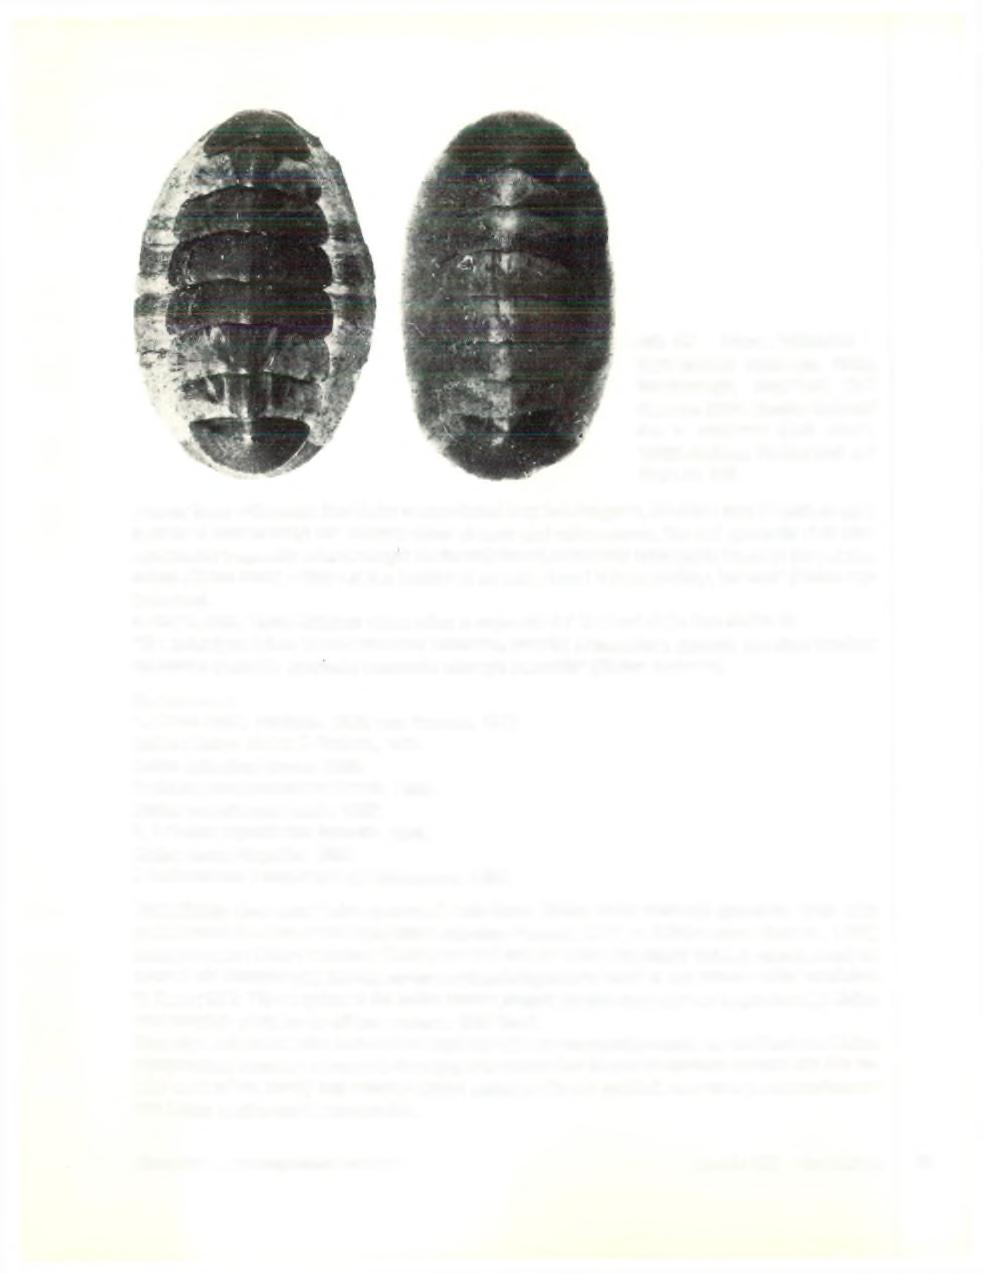 Afb. 68 Links: Cal loch iton s. septemvalvis (Montagu, 1803), Scarborough, Engeland; Coll. Kaas no. 3122. Rechts: Callochi- ton s. euplaeae (O.G. Costa, 1829), Bodrum, Turkije; Coll. J.P. Buys no.